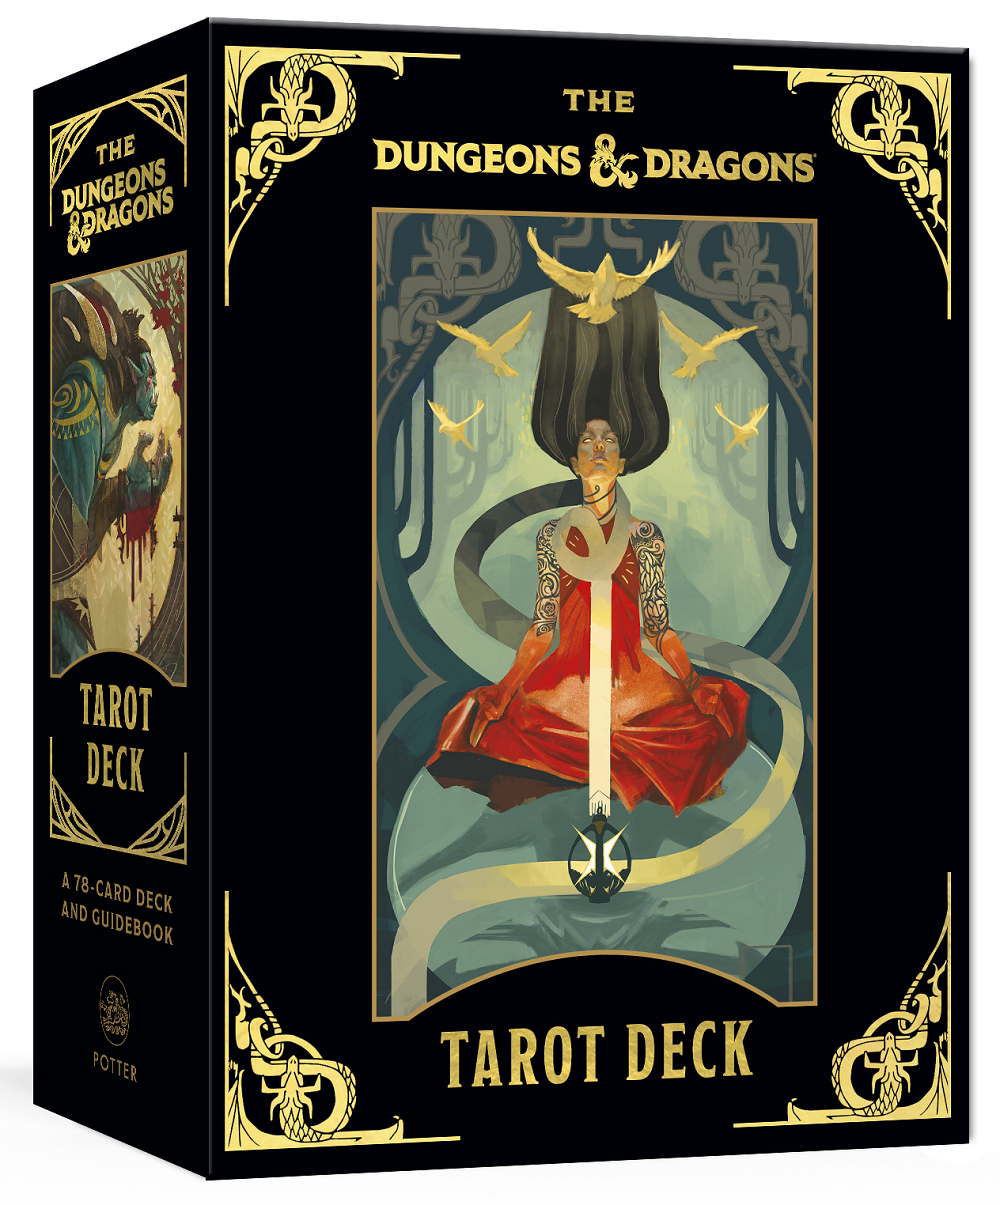 The Dungeons & Dragons: Tarot Deck 